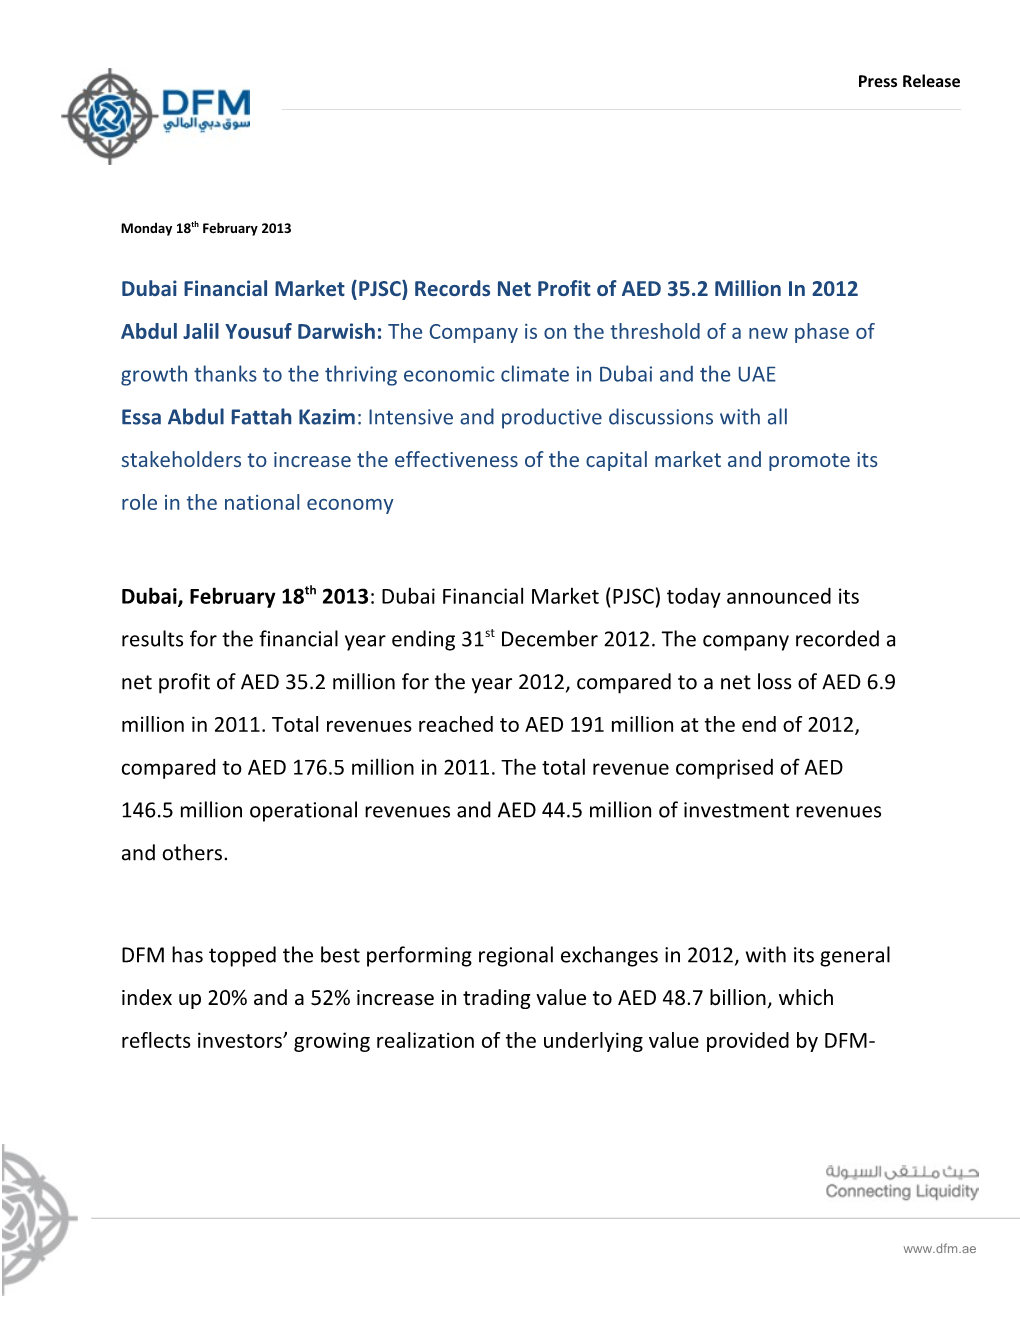 Dubai Financial Market (PJSC)Records Net Profit of AED 35.2Million in 2012